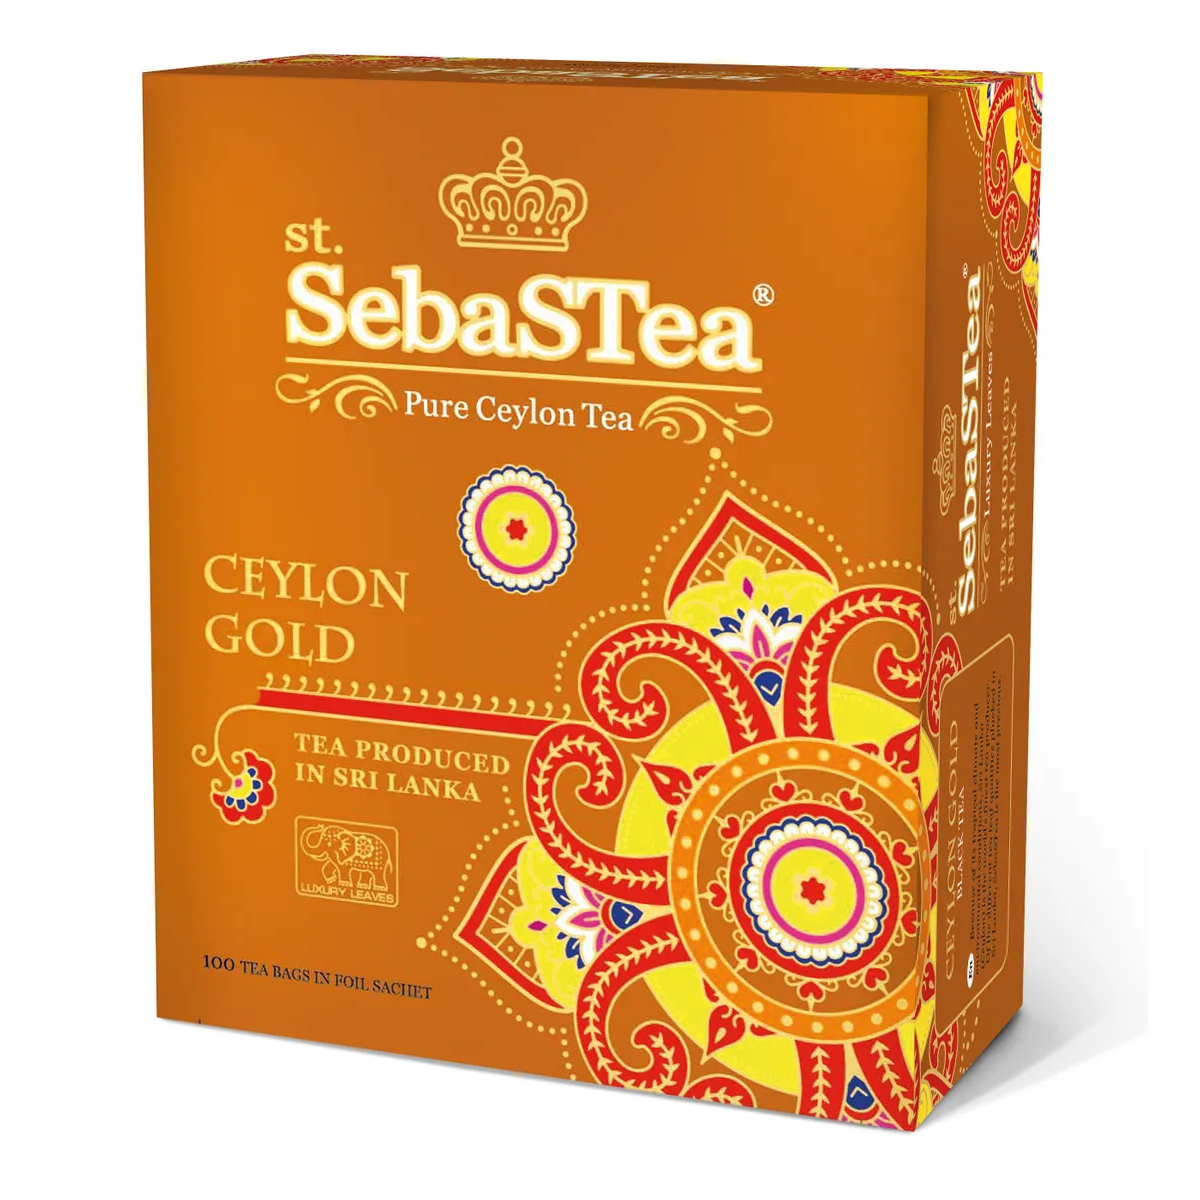 чай sebastea fantasy 5 2 г x 20 шт Чай чёрный SebaSTea Ceylon Gold пакетированный, 100х2 г